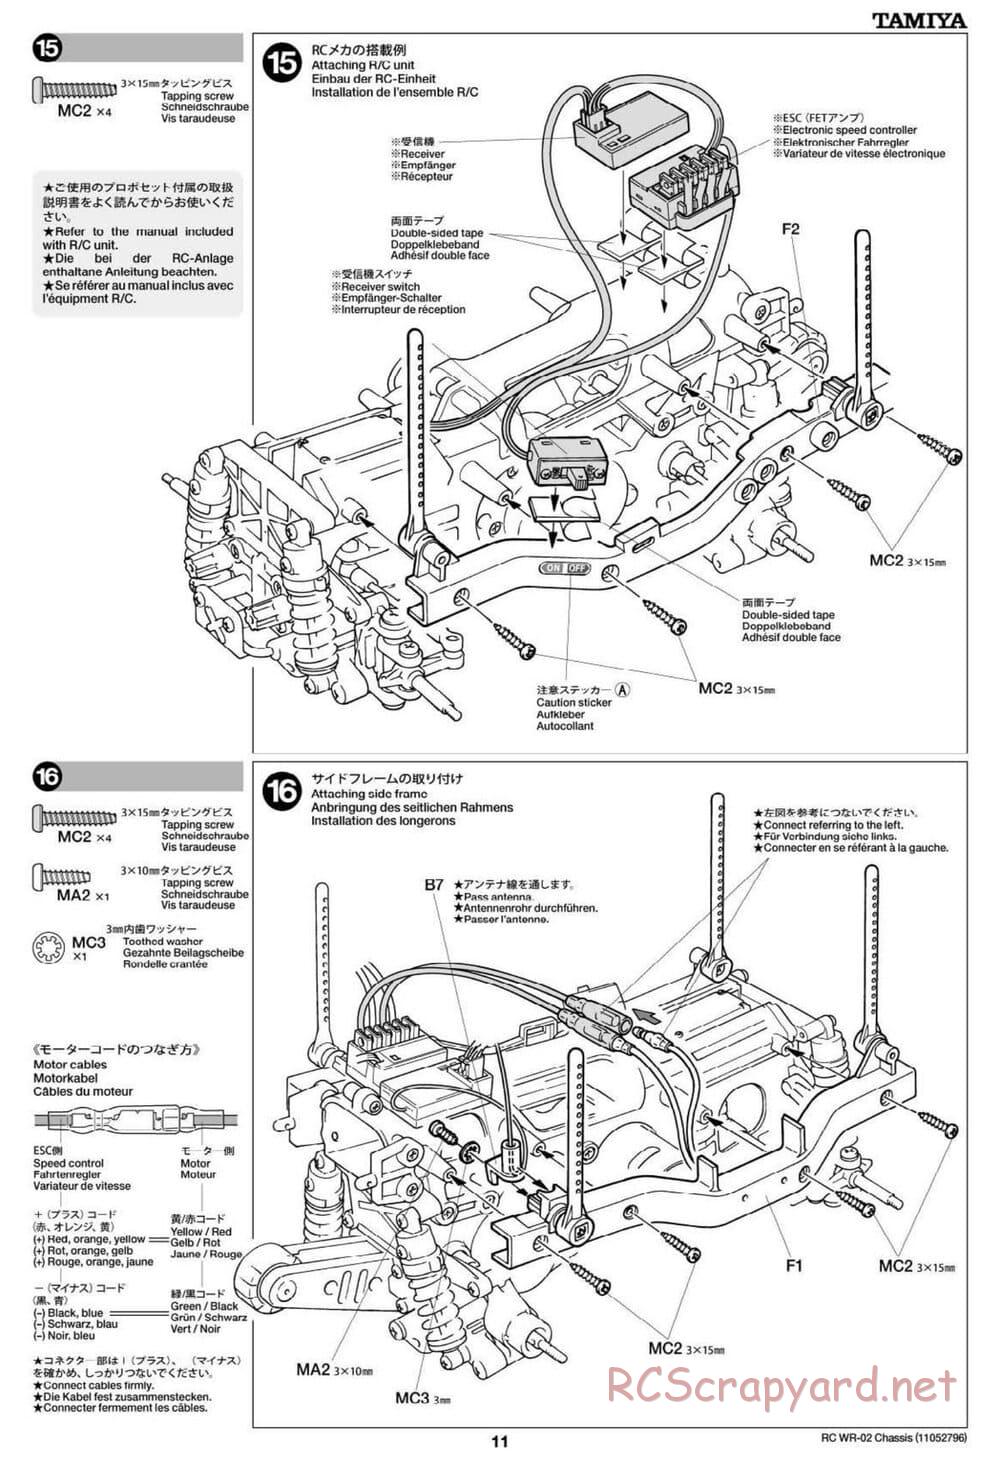 Tamiya - WR-02 Chassis - Manual - Page 11